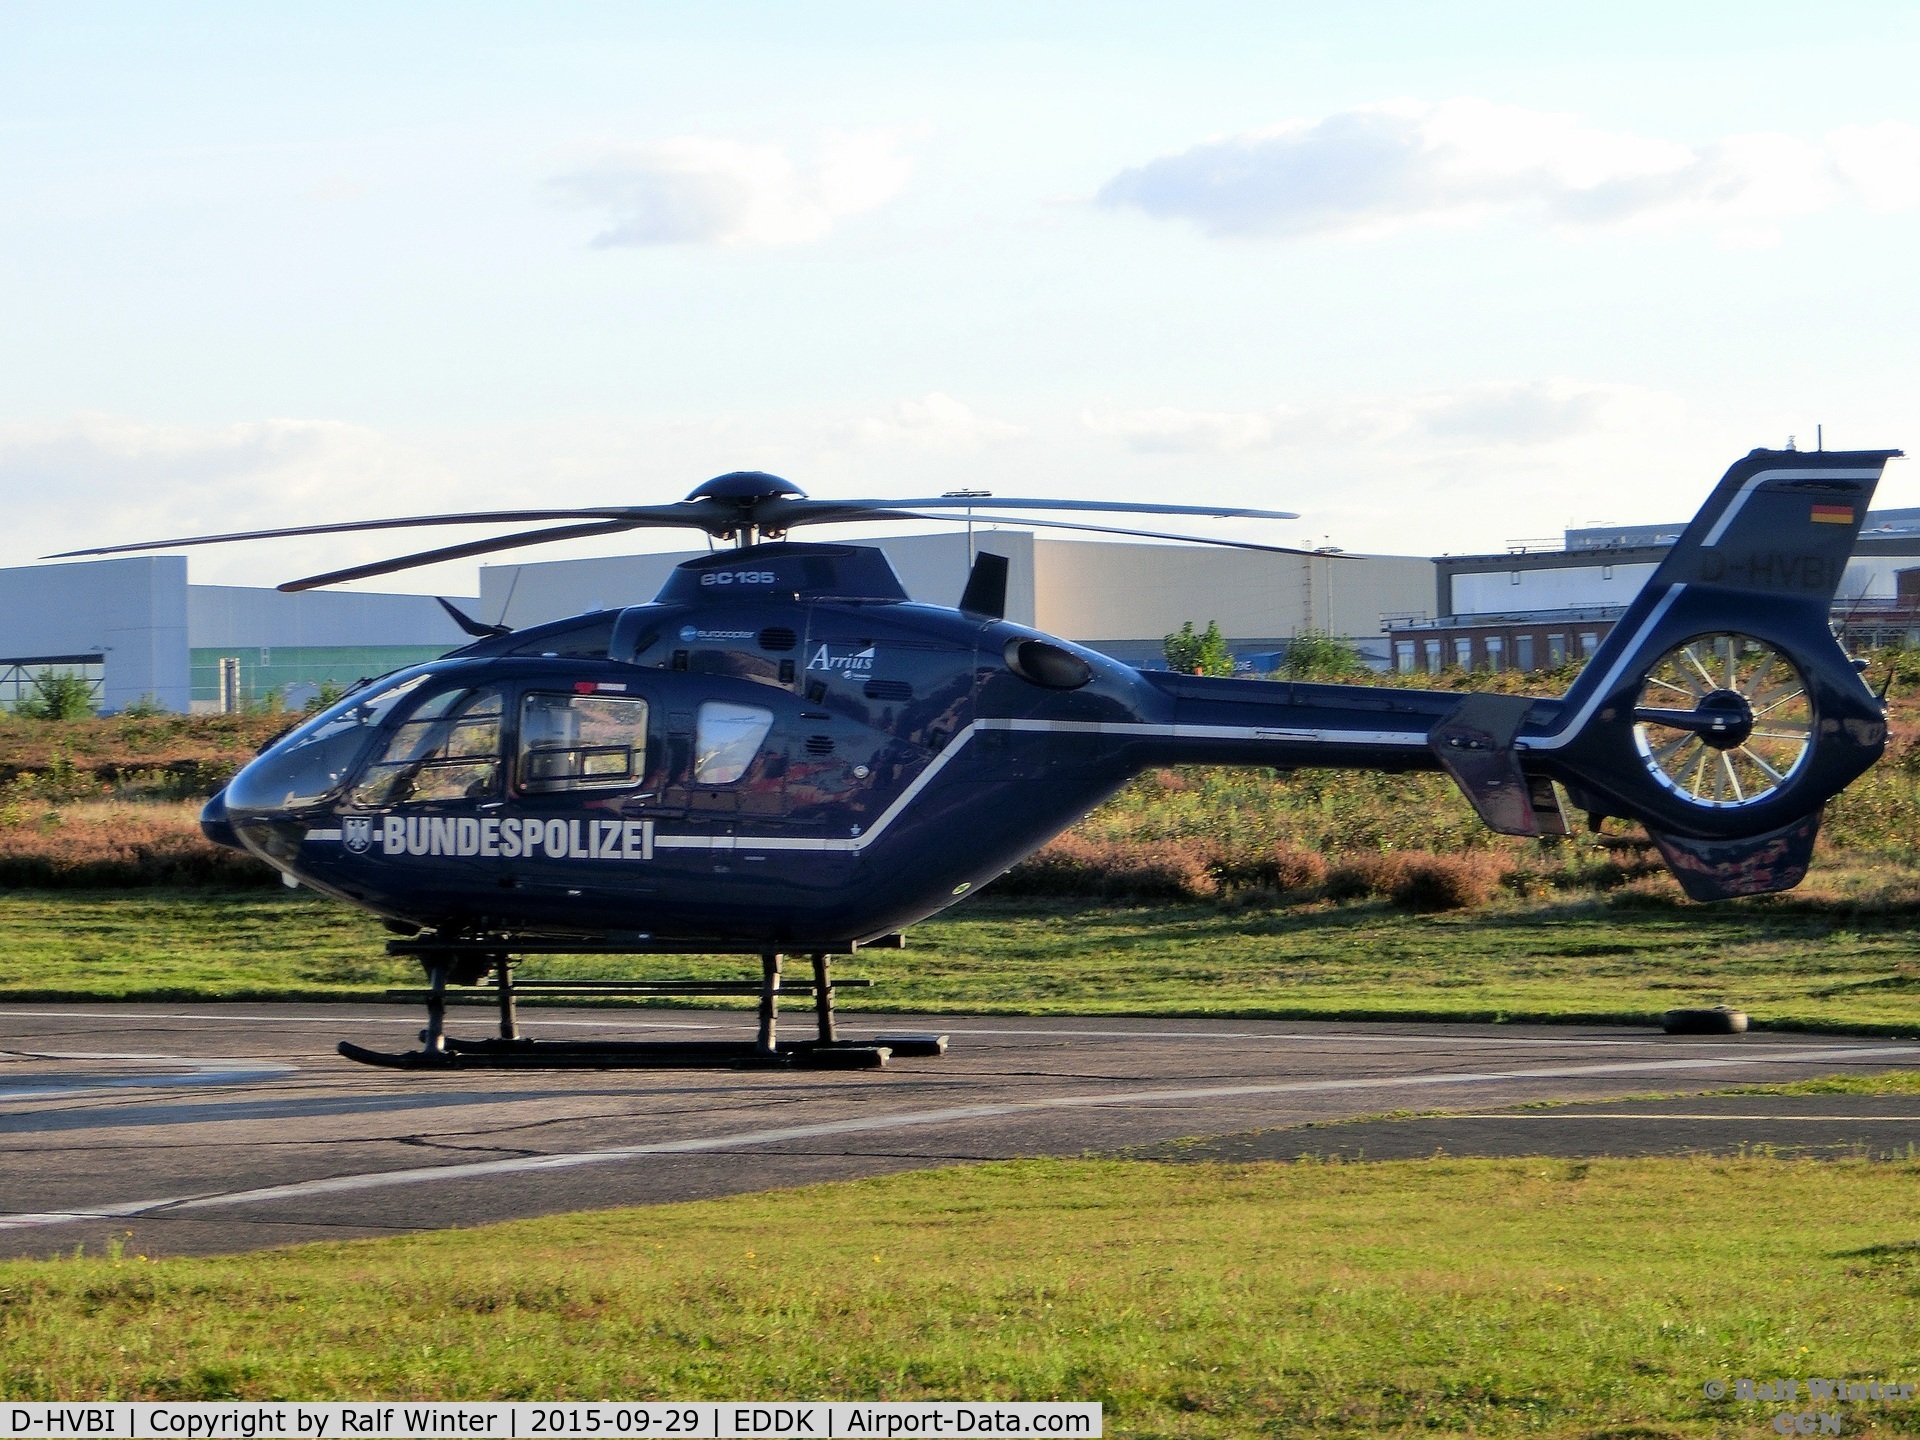 D-HVBI, 2002 Eurocopter EC-135T-2 C/N 0177, Eurocopter EC-135 T2 - Bundespolizei - D-HVBI - 29.09.2015 - CGN